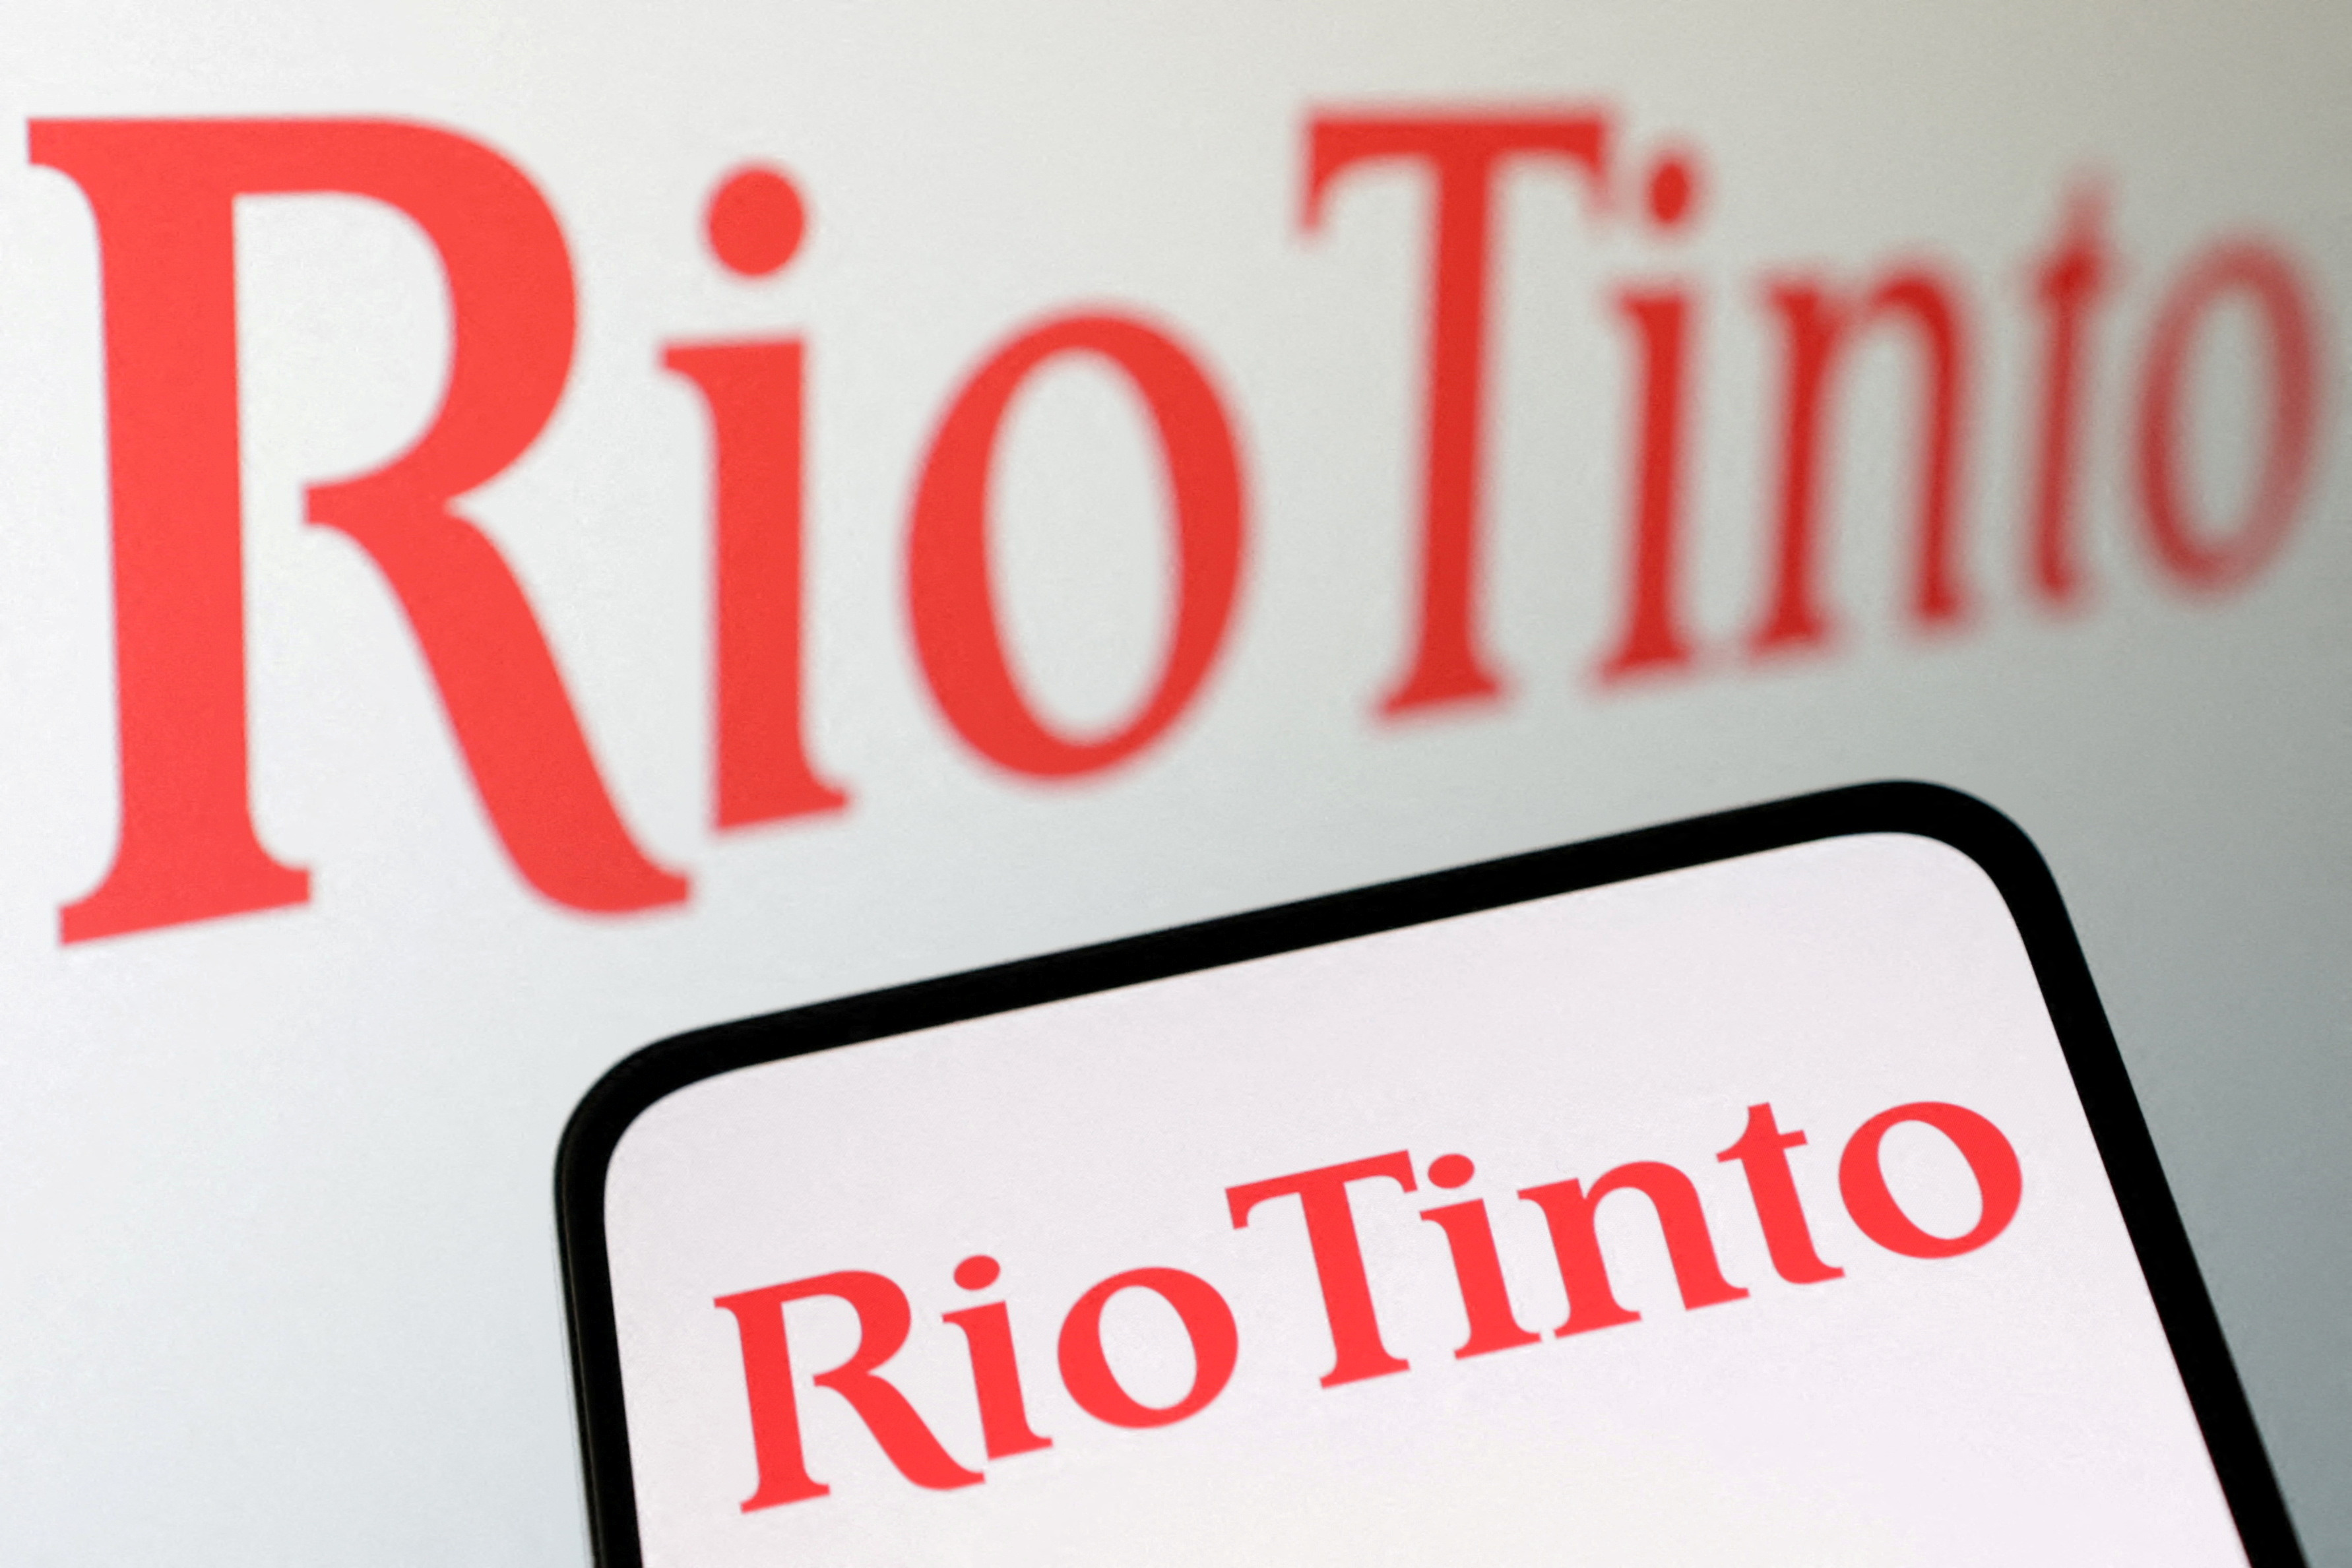 Illustration shows Rio Tinto logo